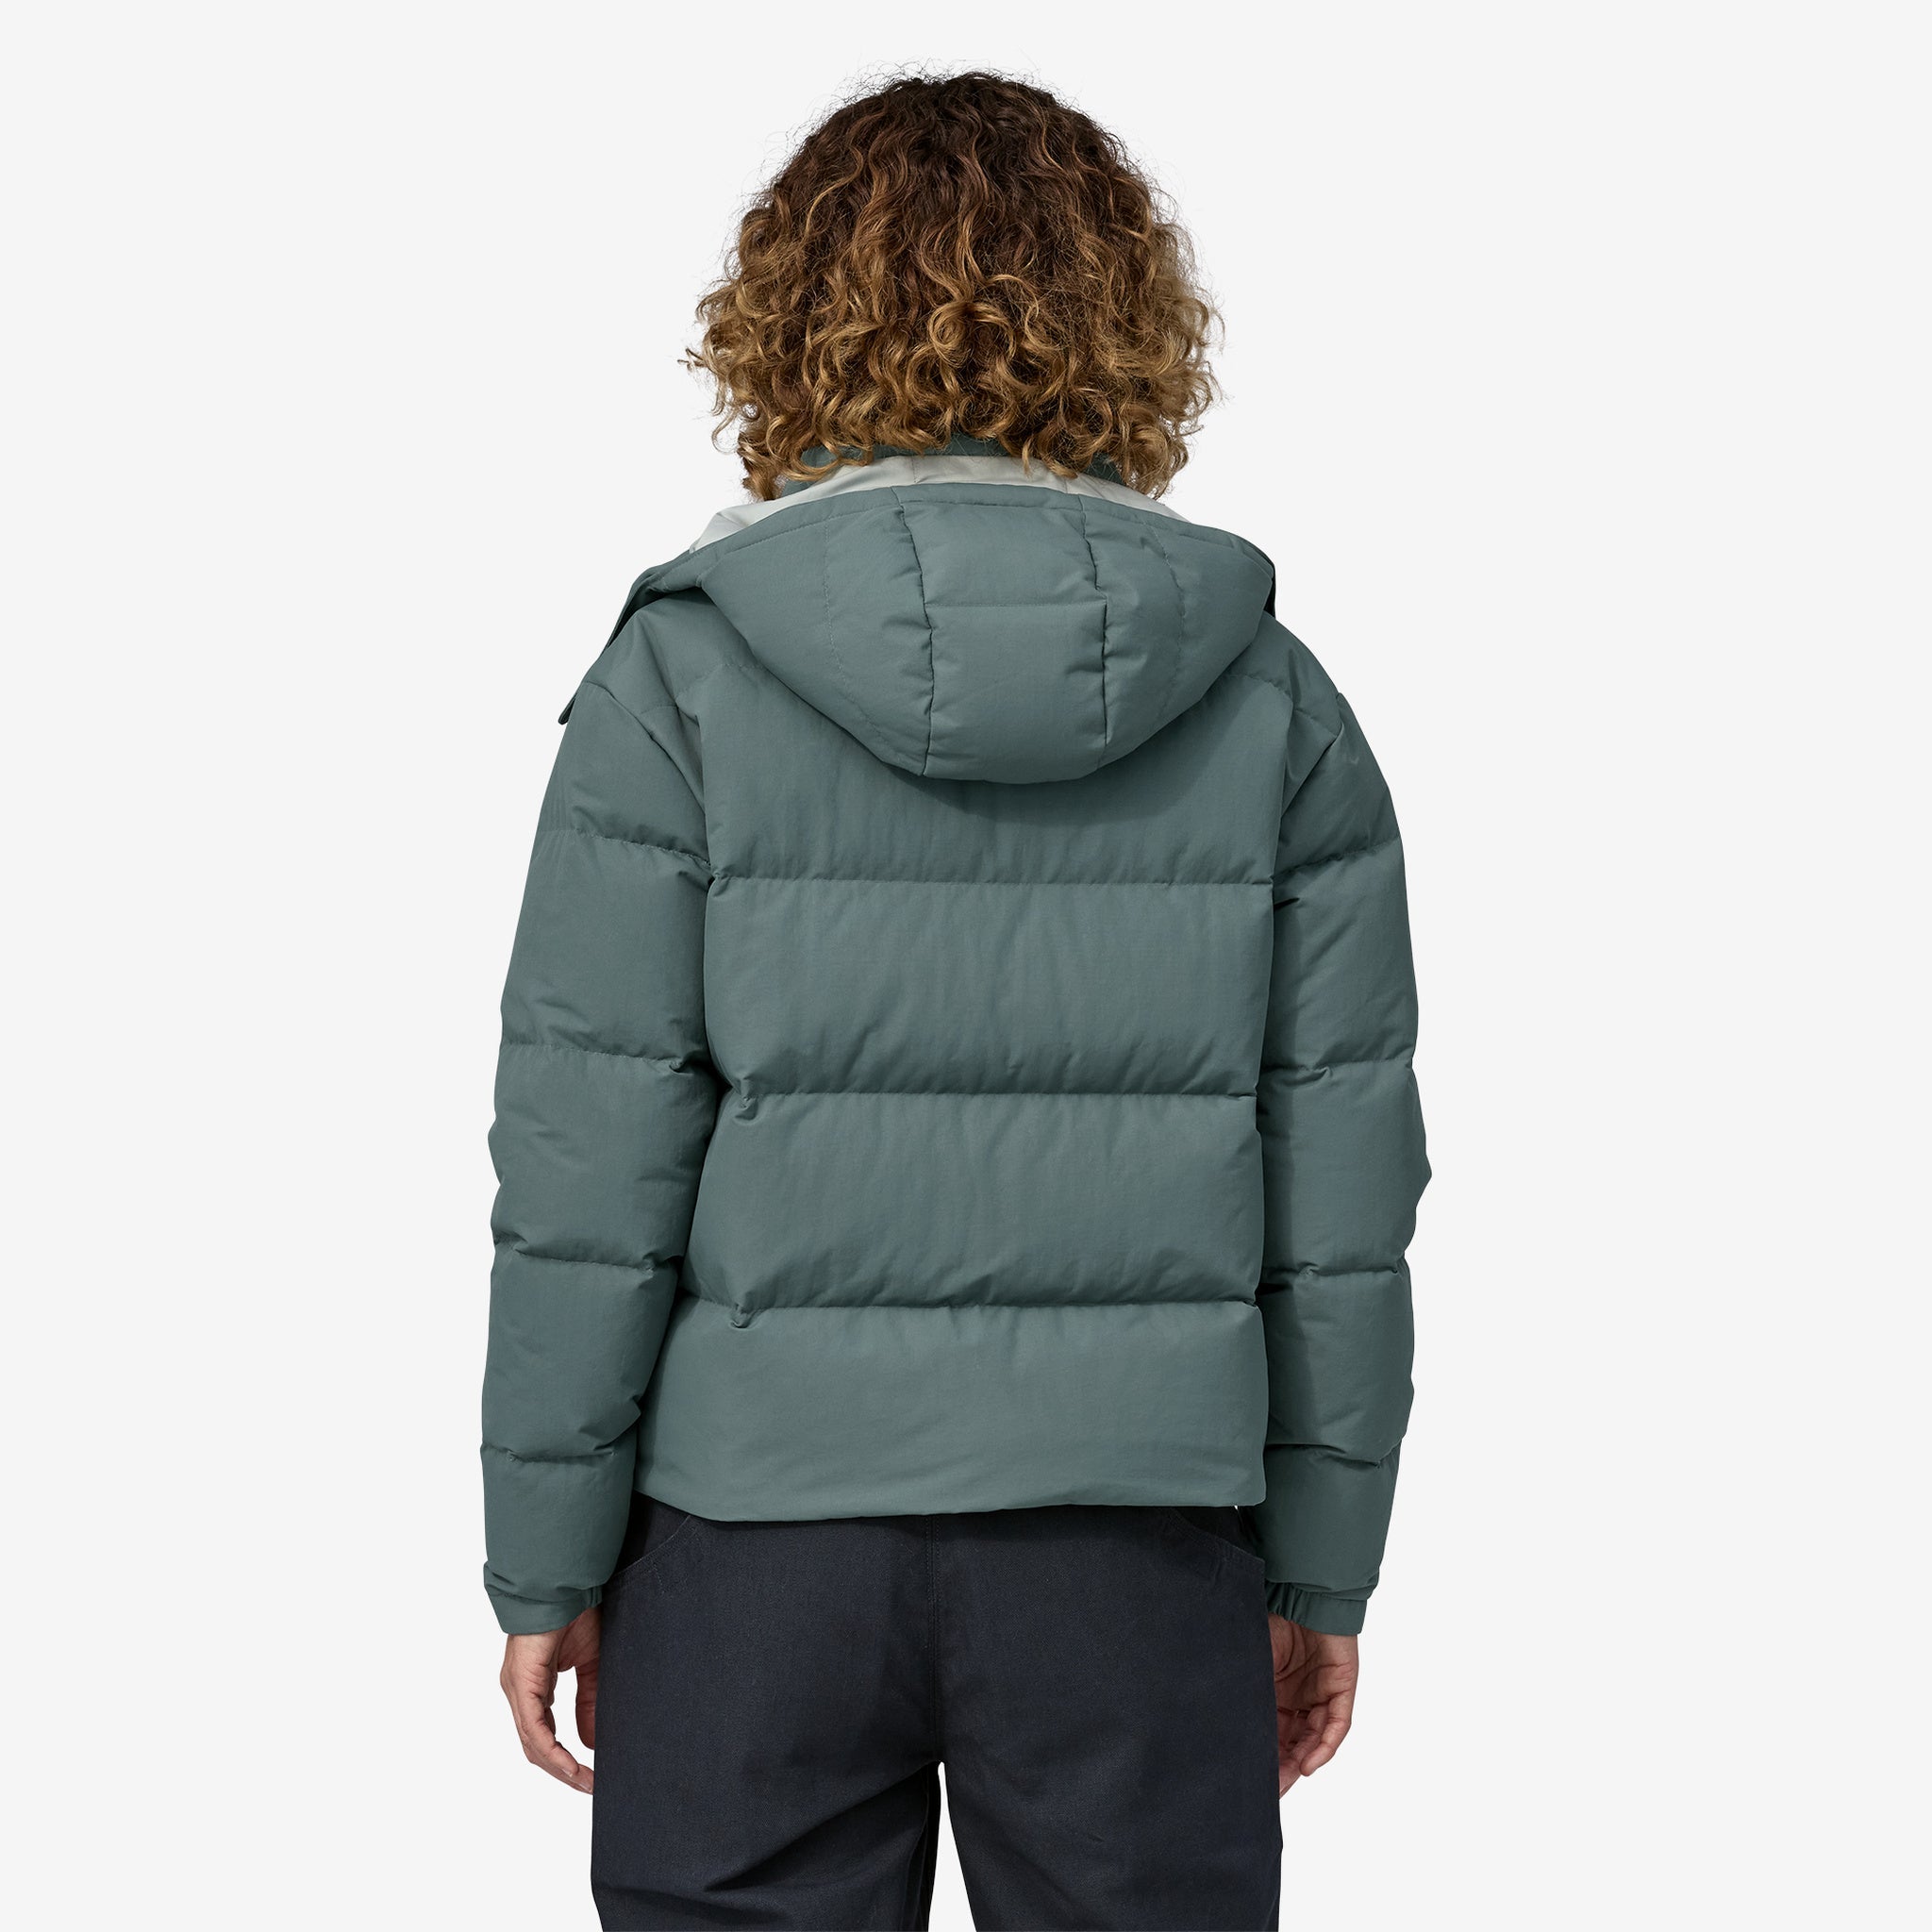 Patagonia Women's Downdrift Jacket Black 20625 Size L Retail $329